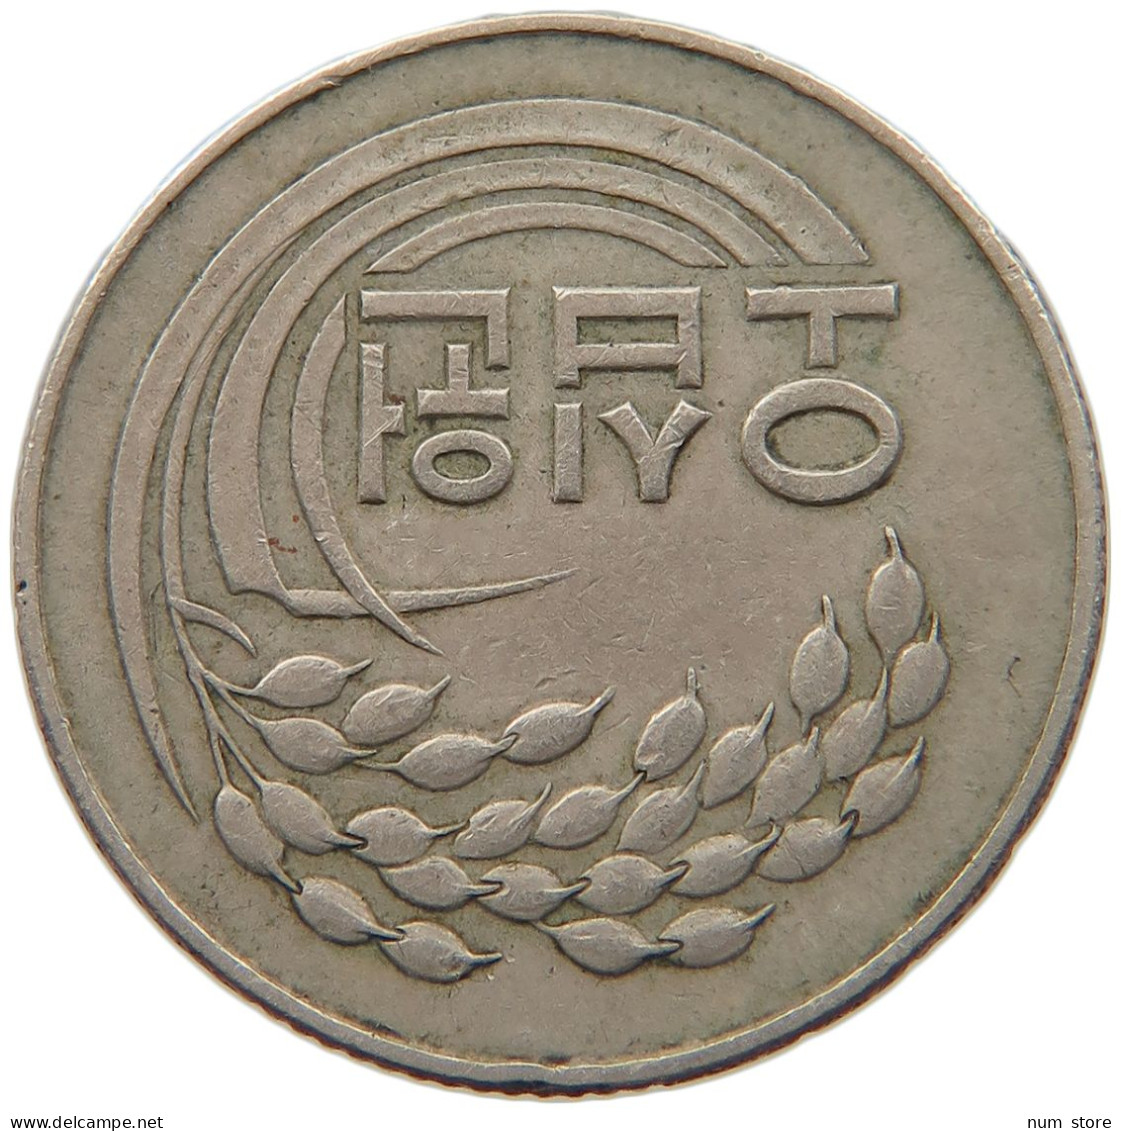 KOREA SOUTH 50 WON 1973 #s087 0417 - Korea (Zuid)